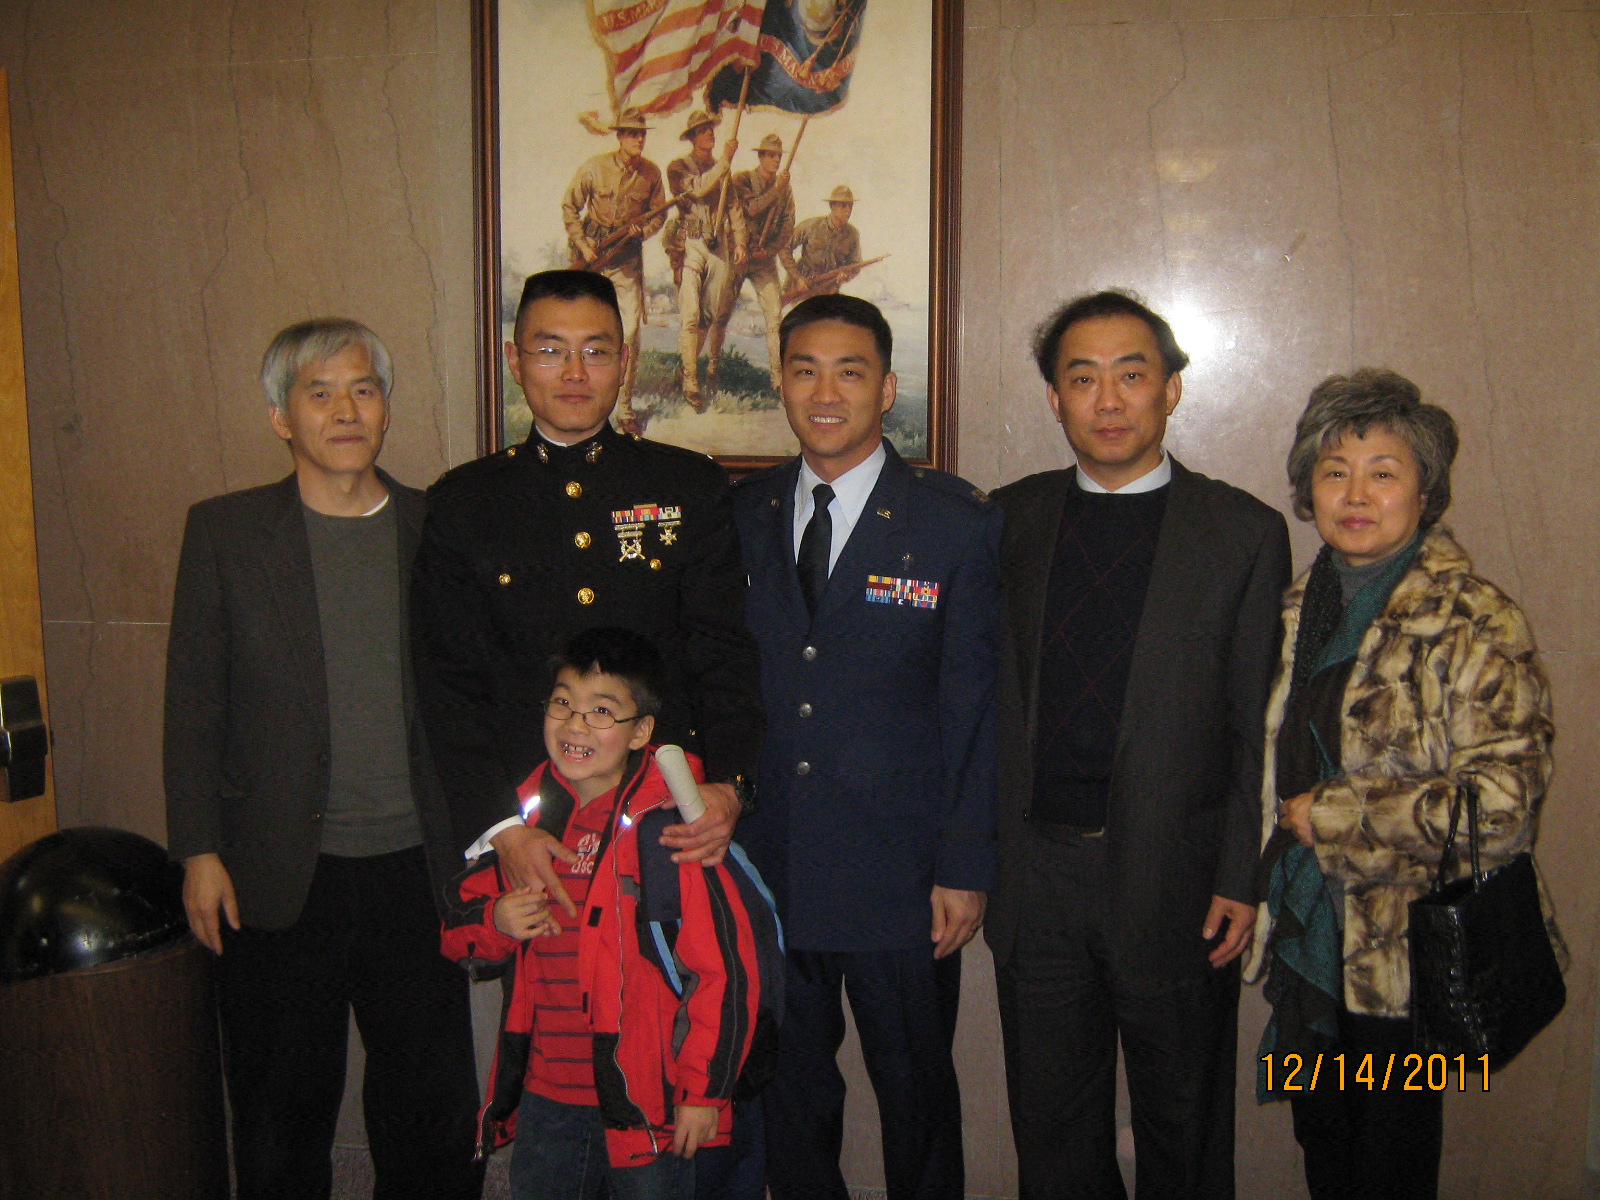 IMG_1802.JPG : Dec 14, 2011 Jason's Graduation at Quantico Marine Base